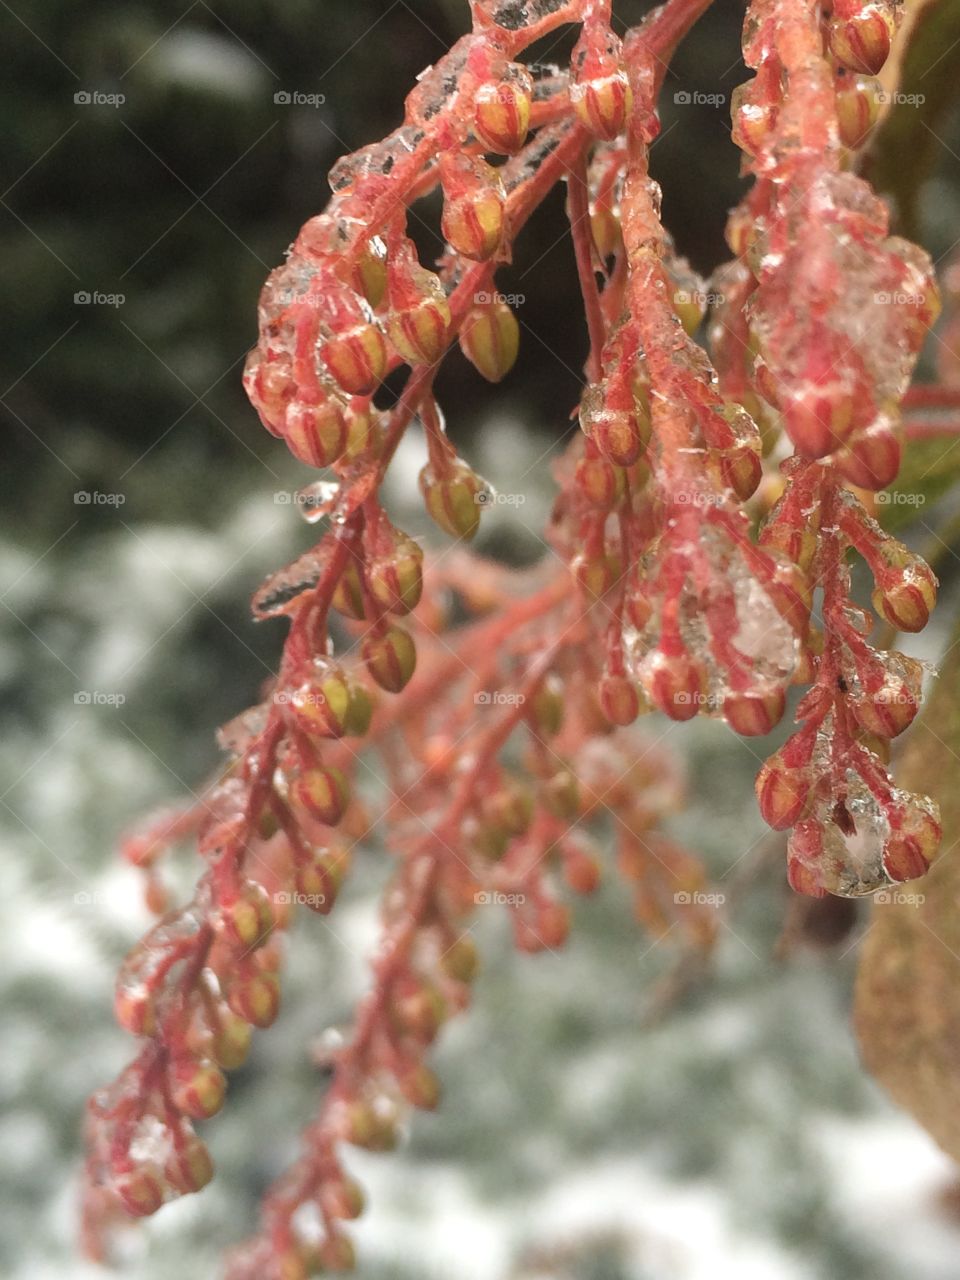 Ice on flower buds